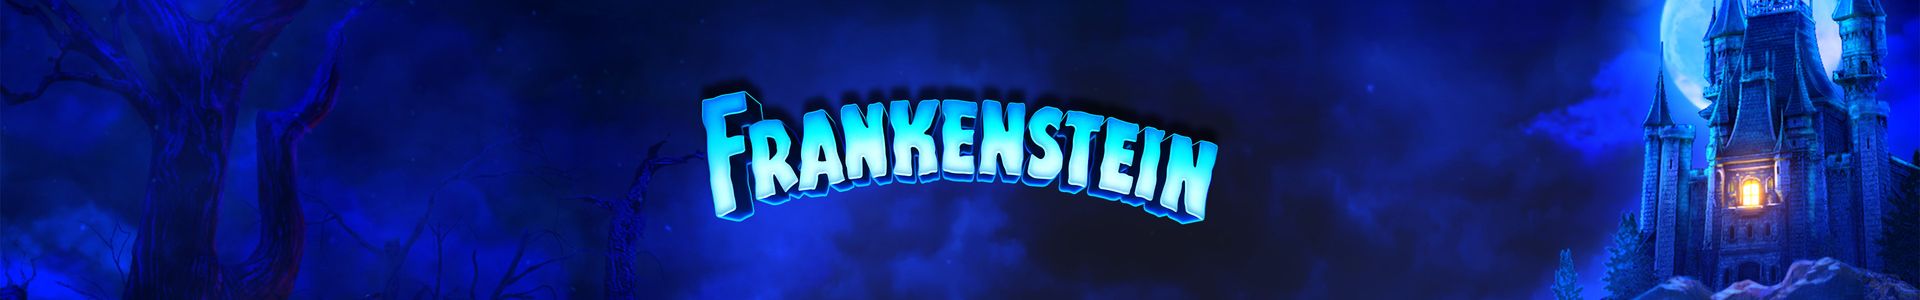 Frankenstein Arrives at Snoqualmie Casino